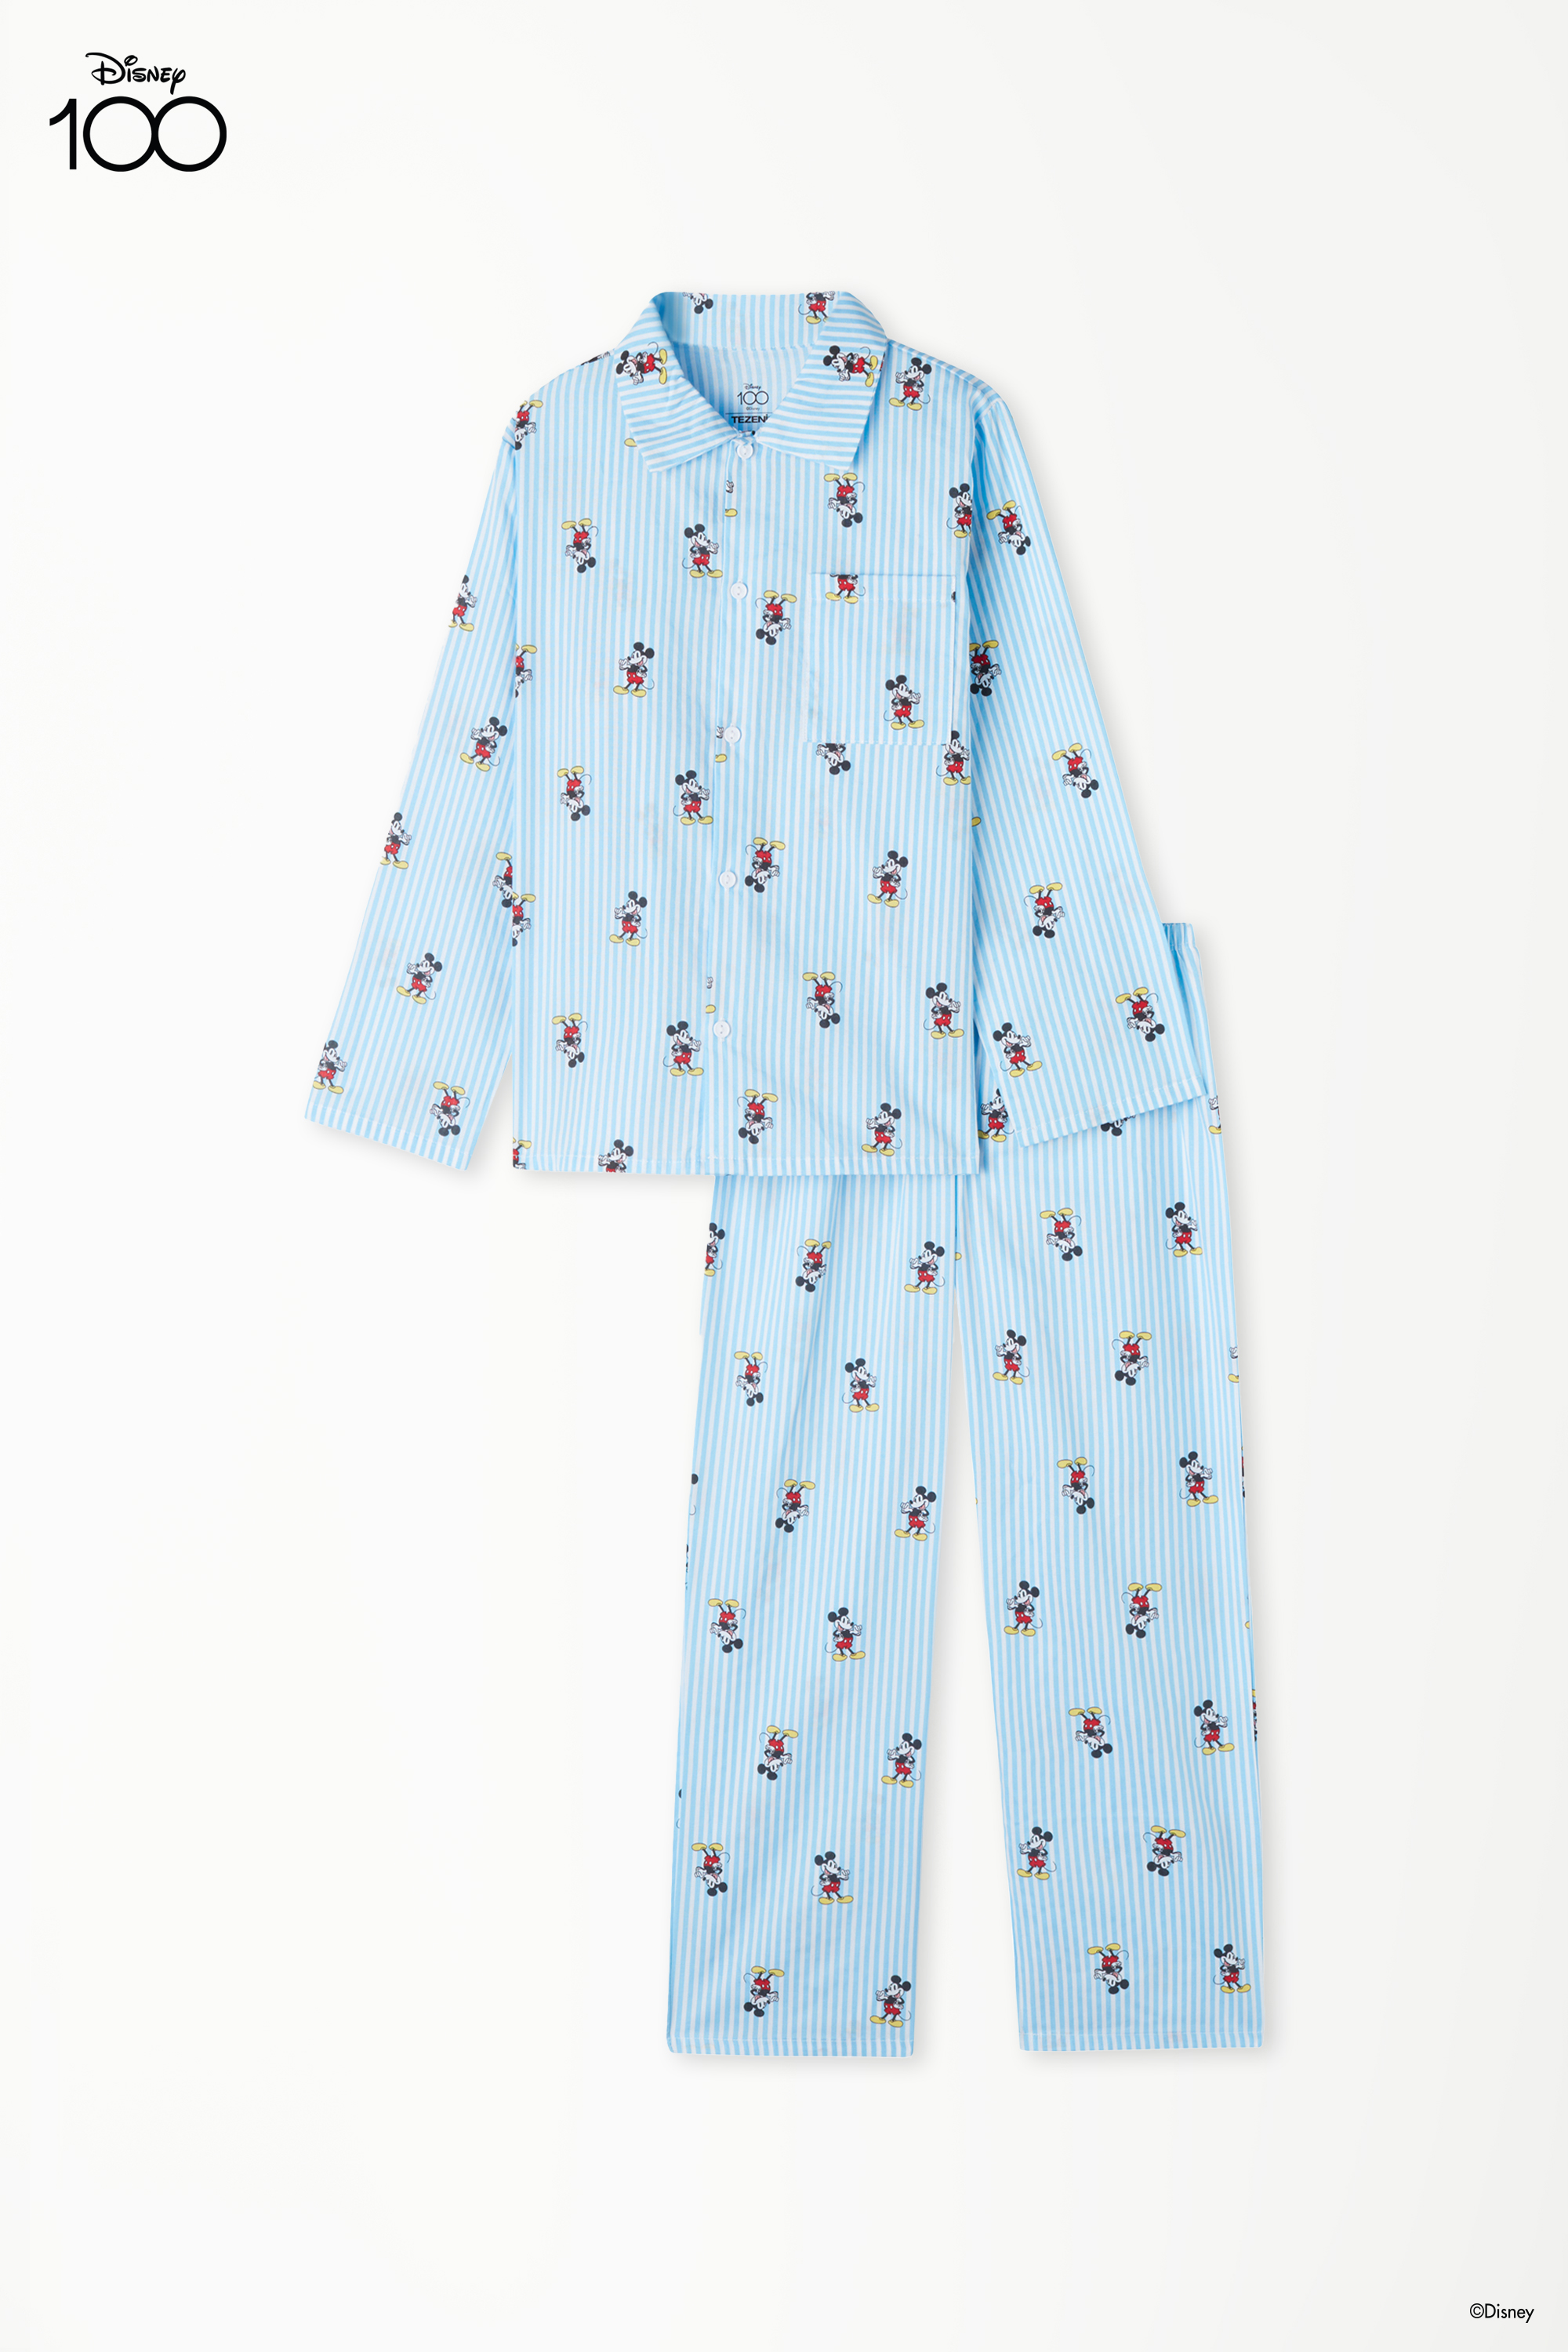 Pyjama Long Garçon Ouvert Toile de Coton Imprimé Disney 100